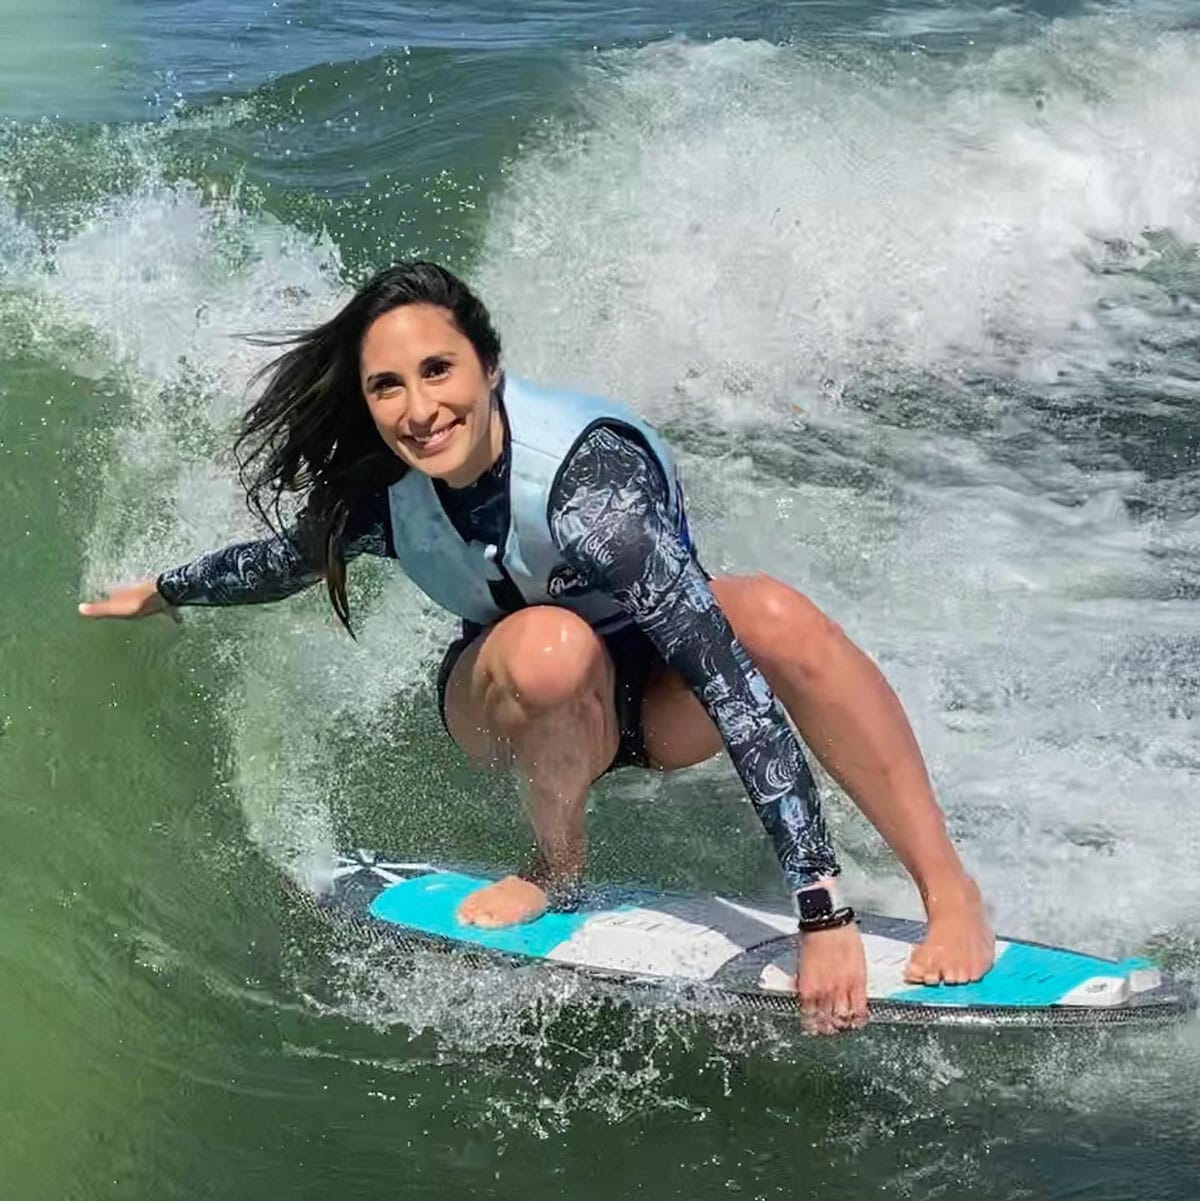 A woman wakesurfing on a surfboard.